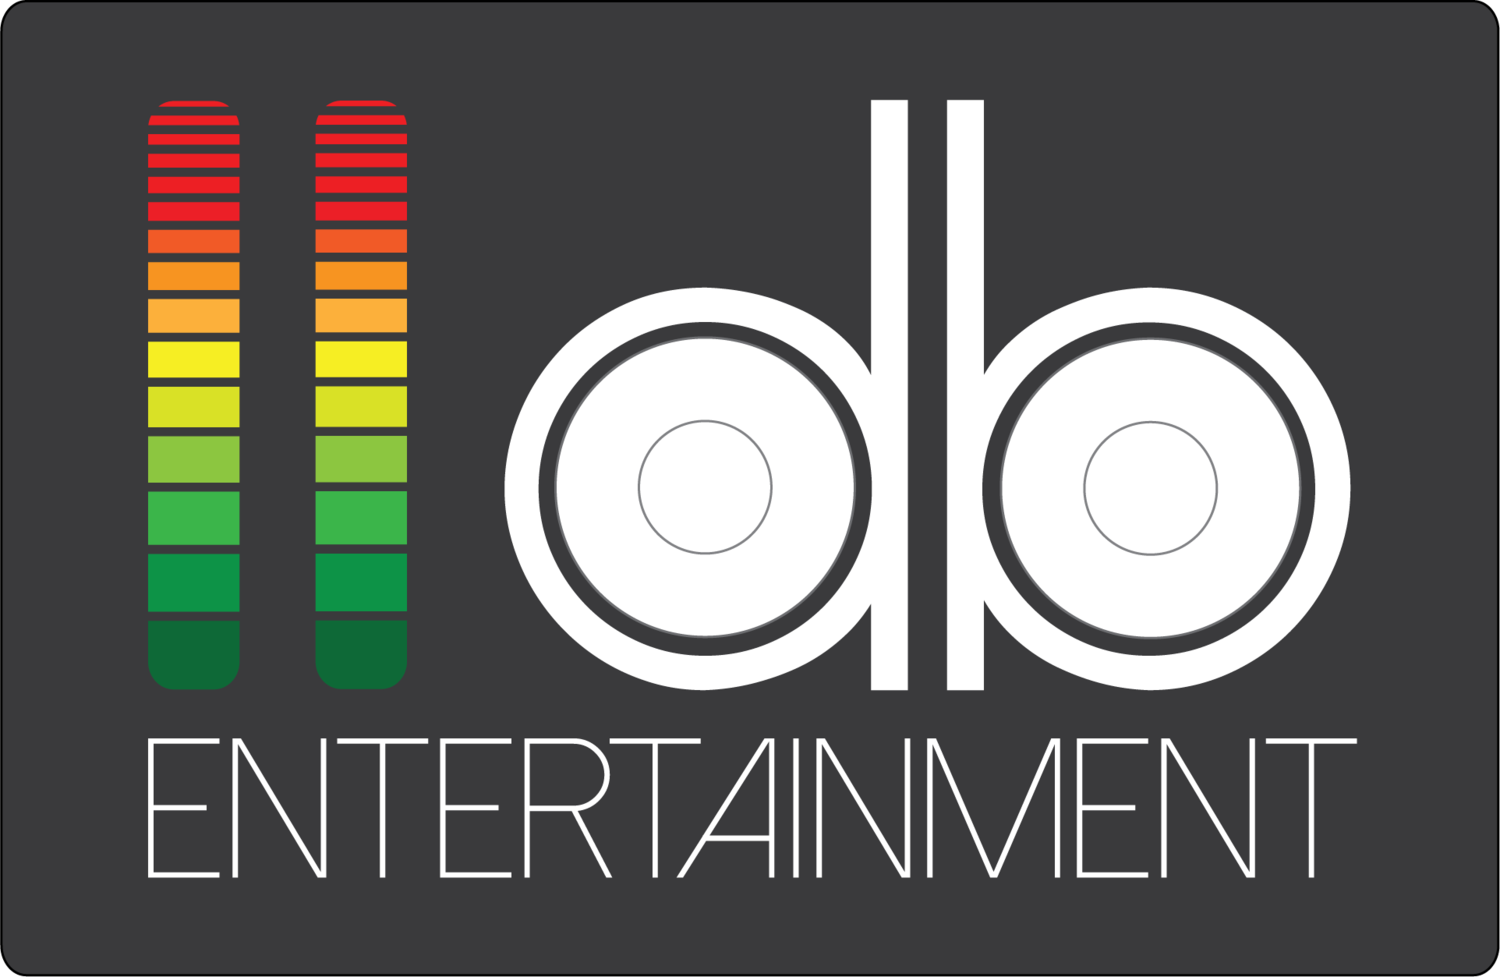 11 db Entertainment